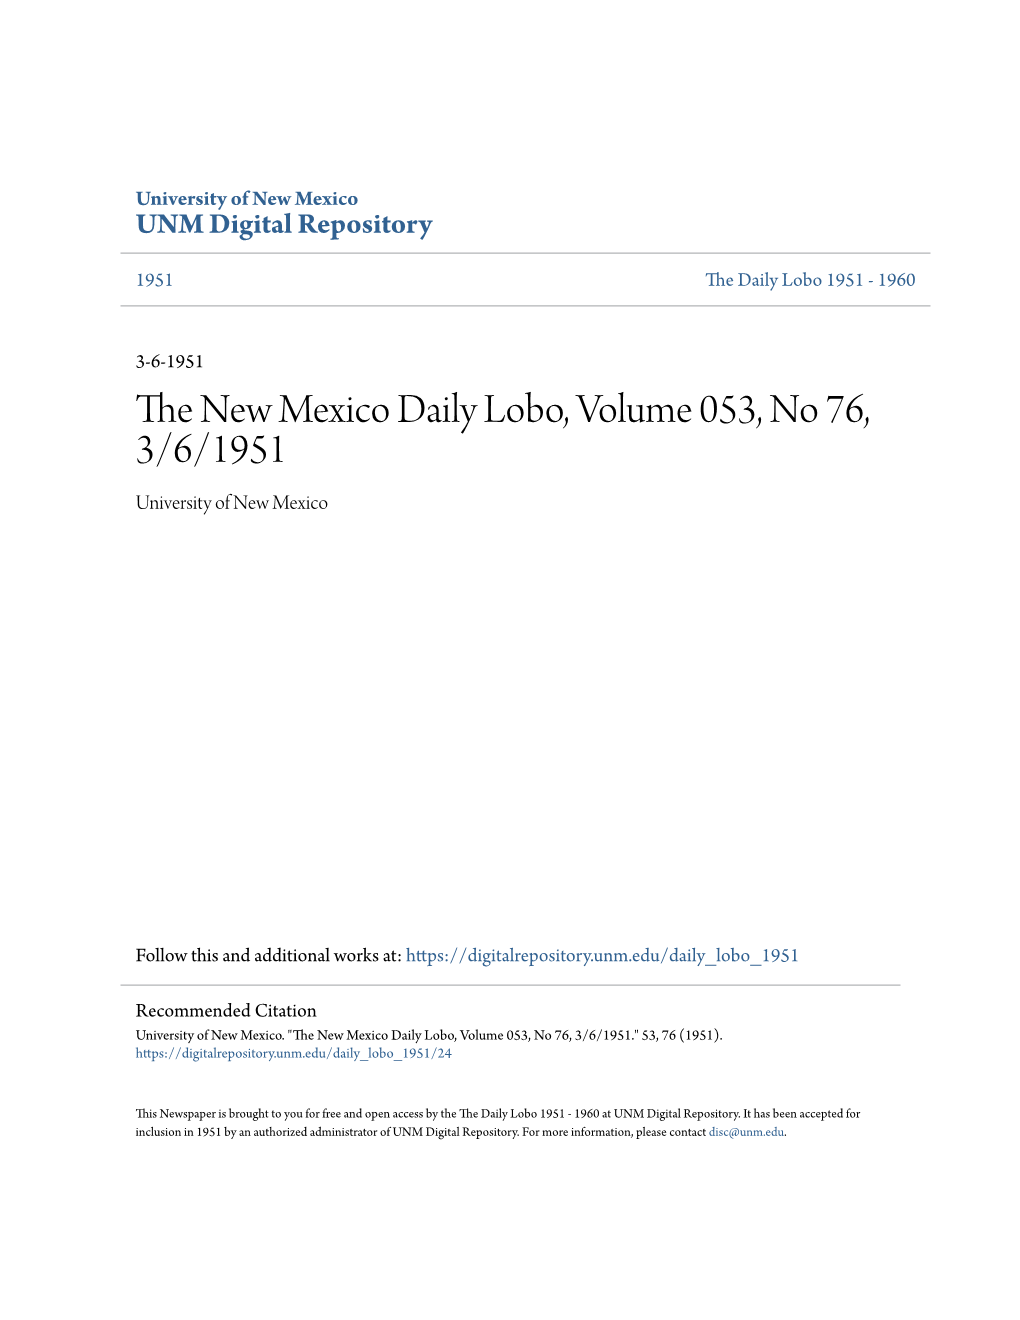 The New Mexico Daily Lobo, Volume 053, No 76, 3/6/1951